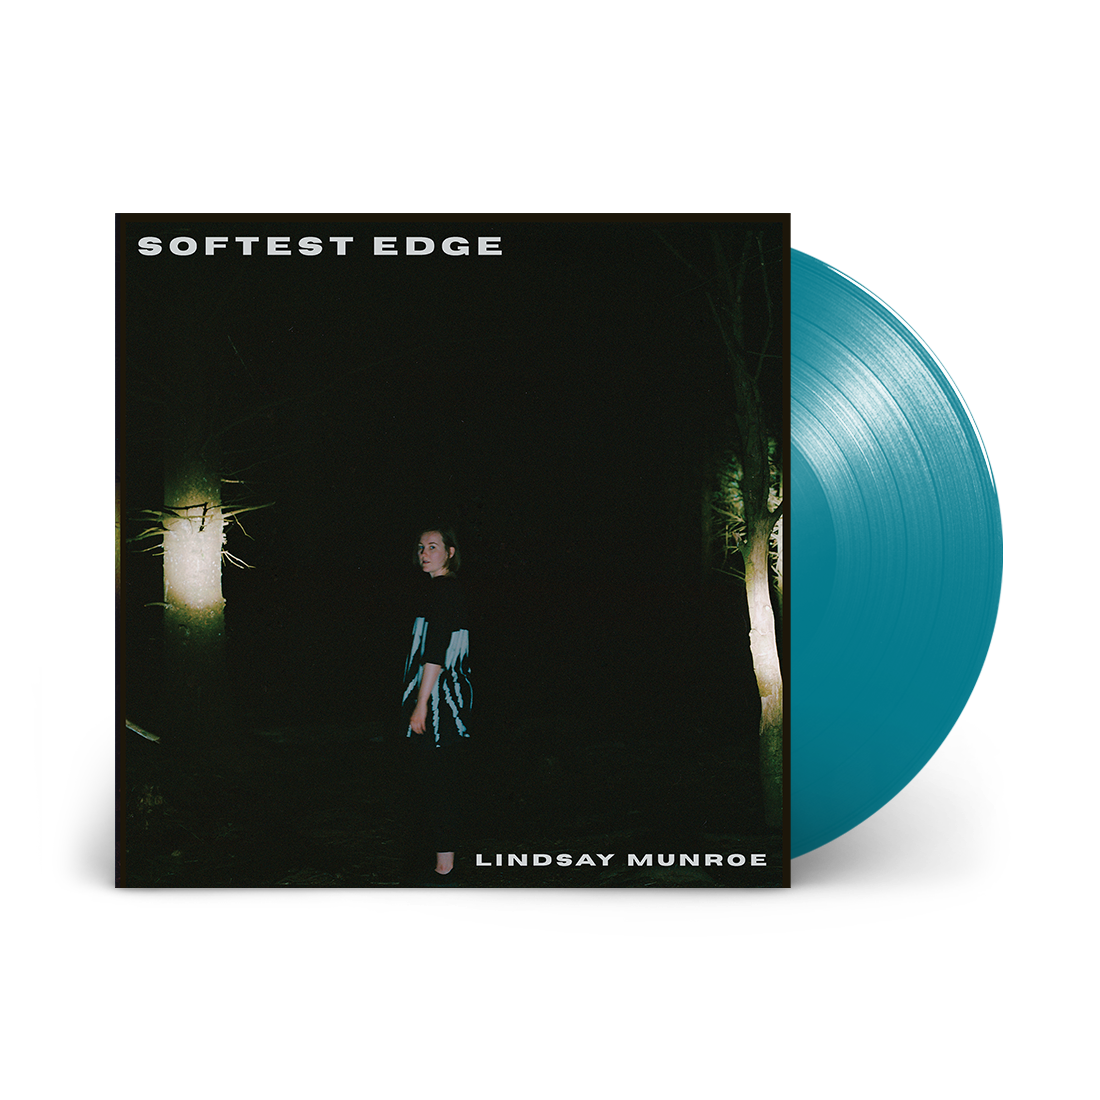 Lindsay Munroe - Softest Edge: Exclusive Signed Turquoise Vinyl 7" EP